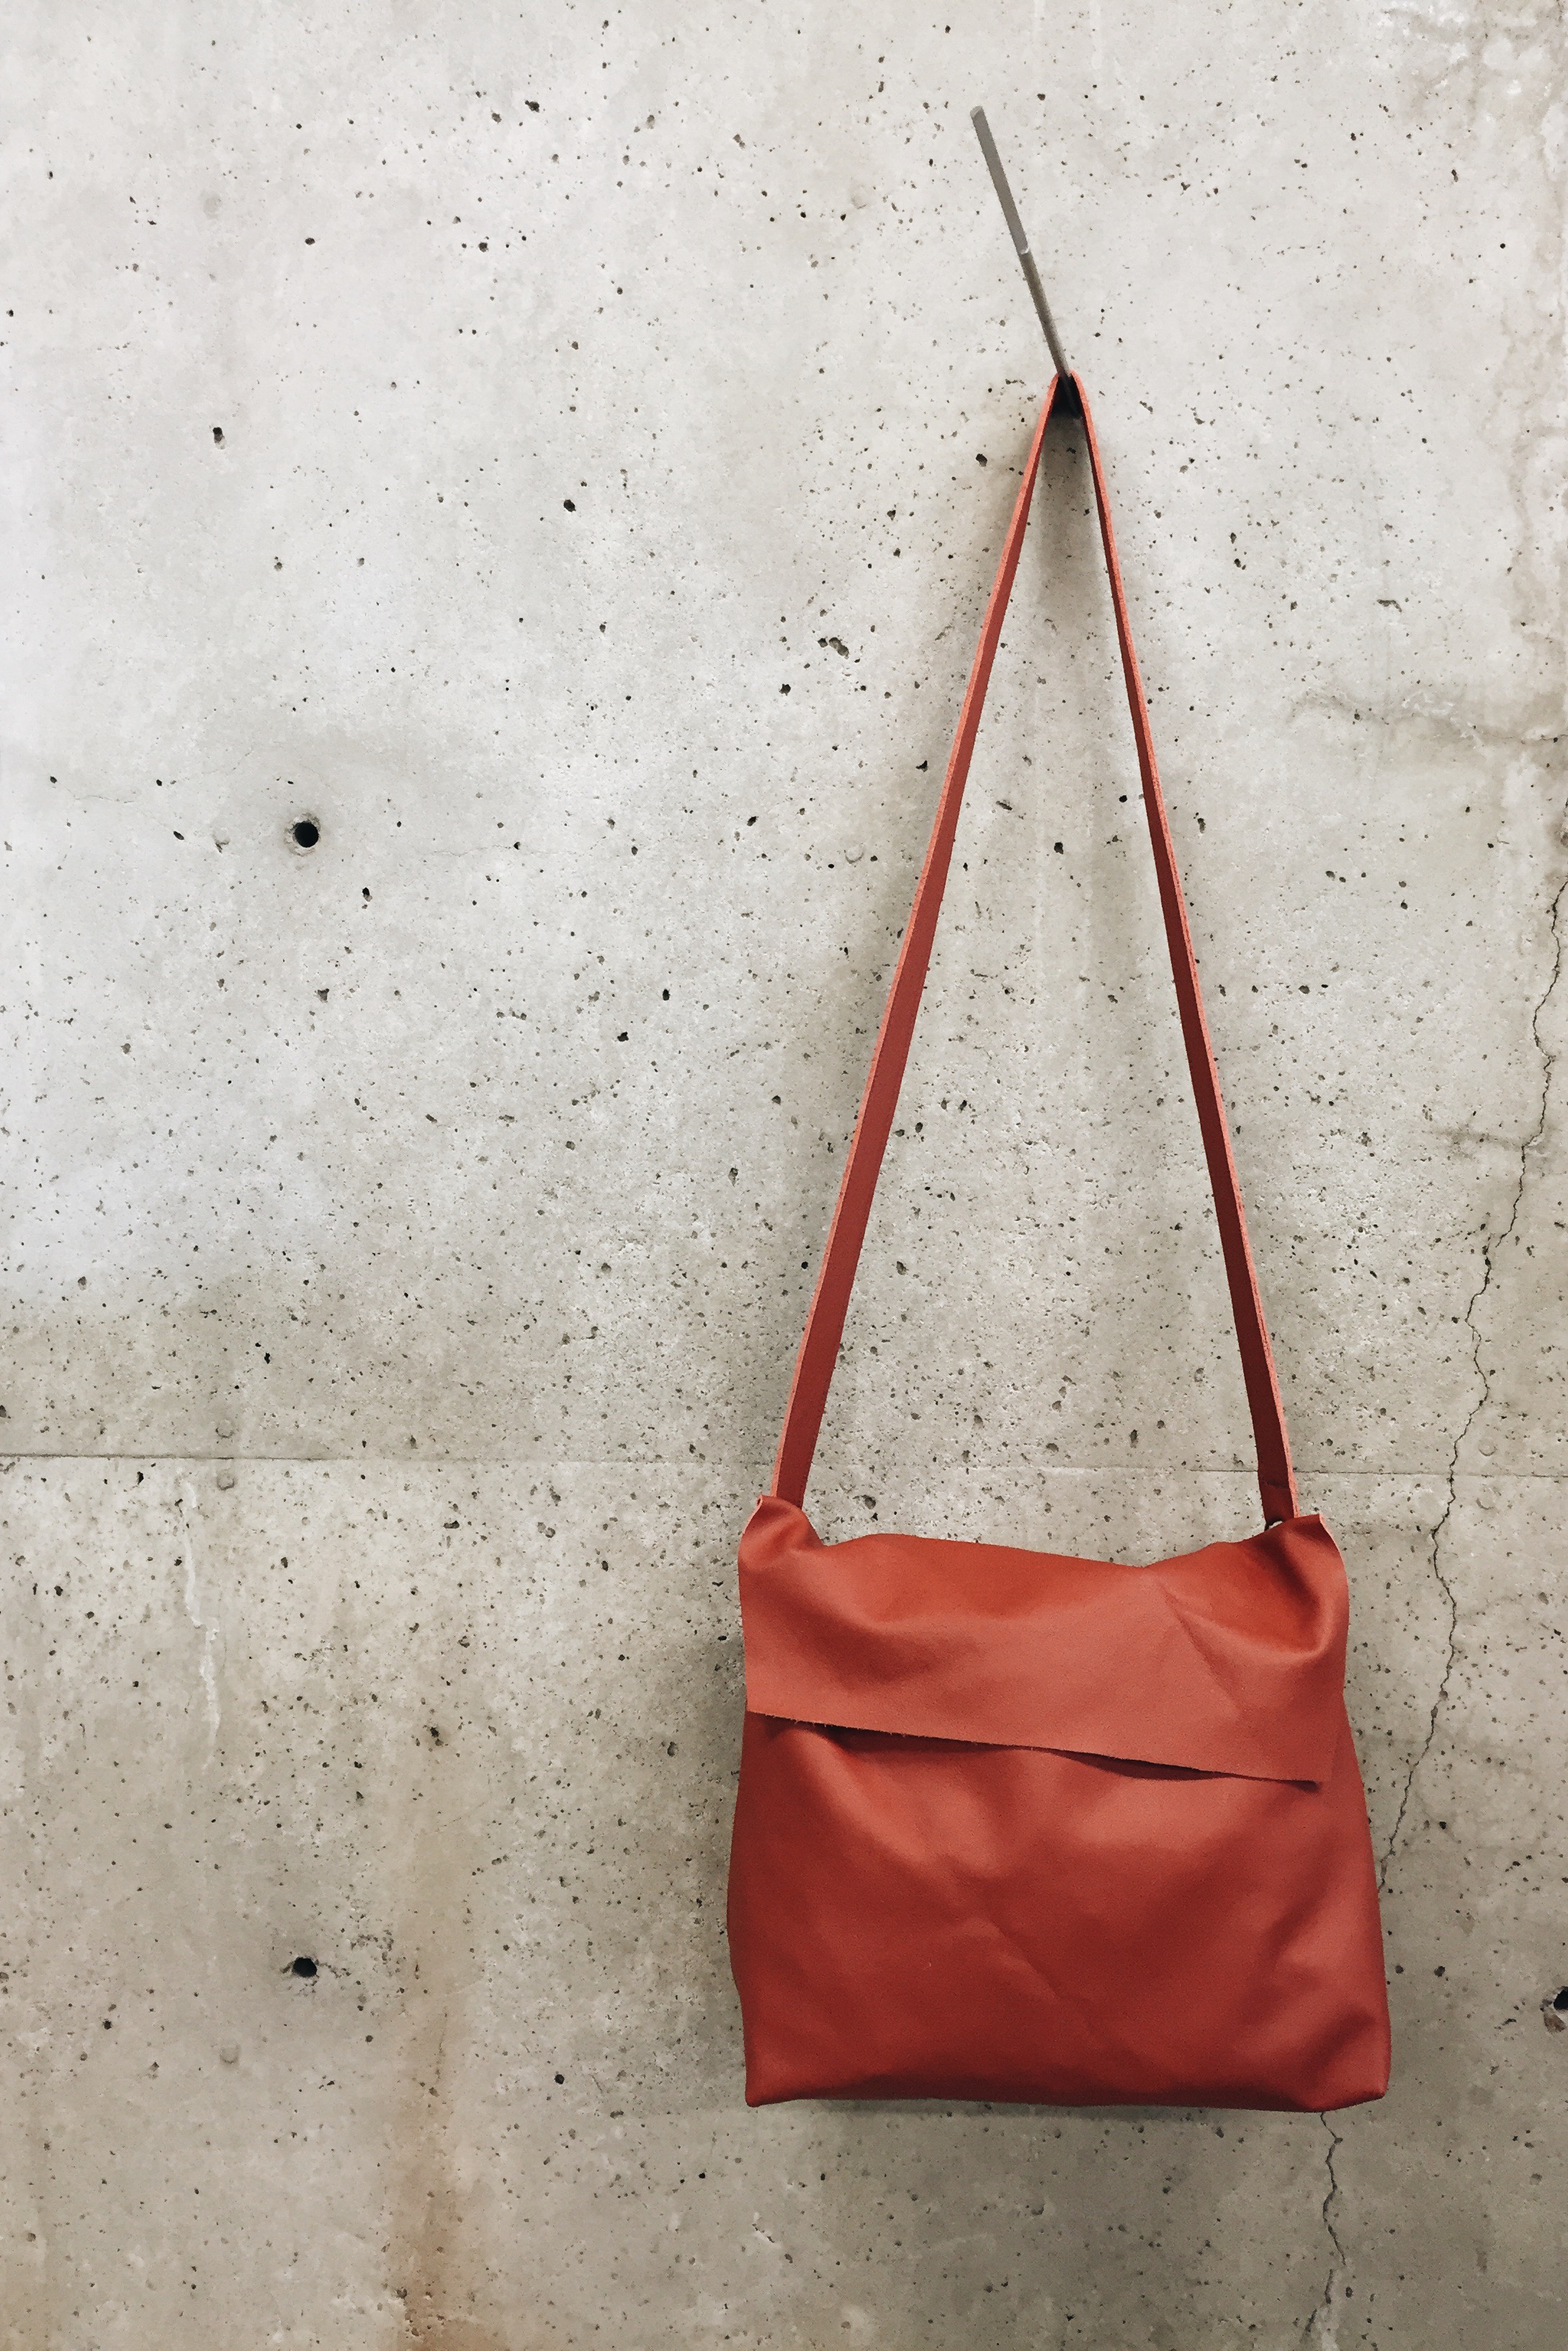 Square red bag (3).JPG